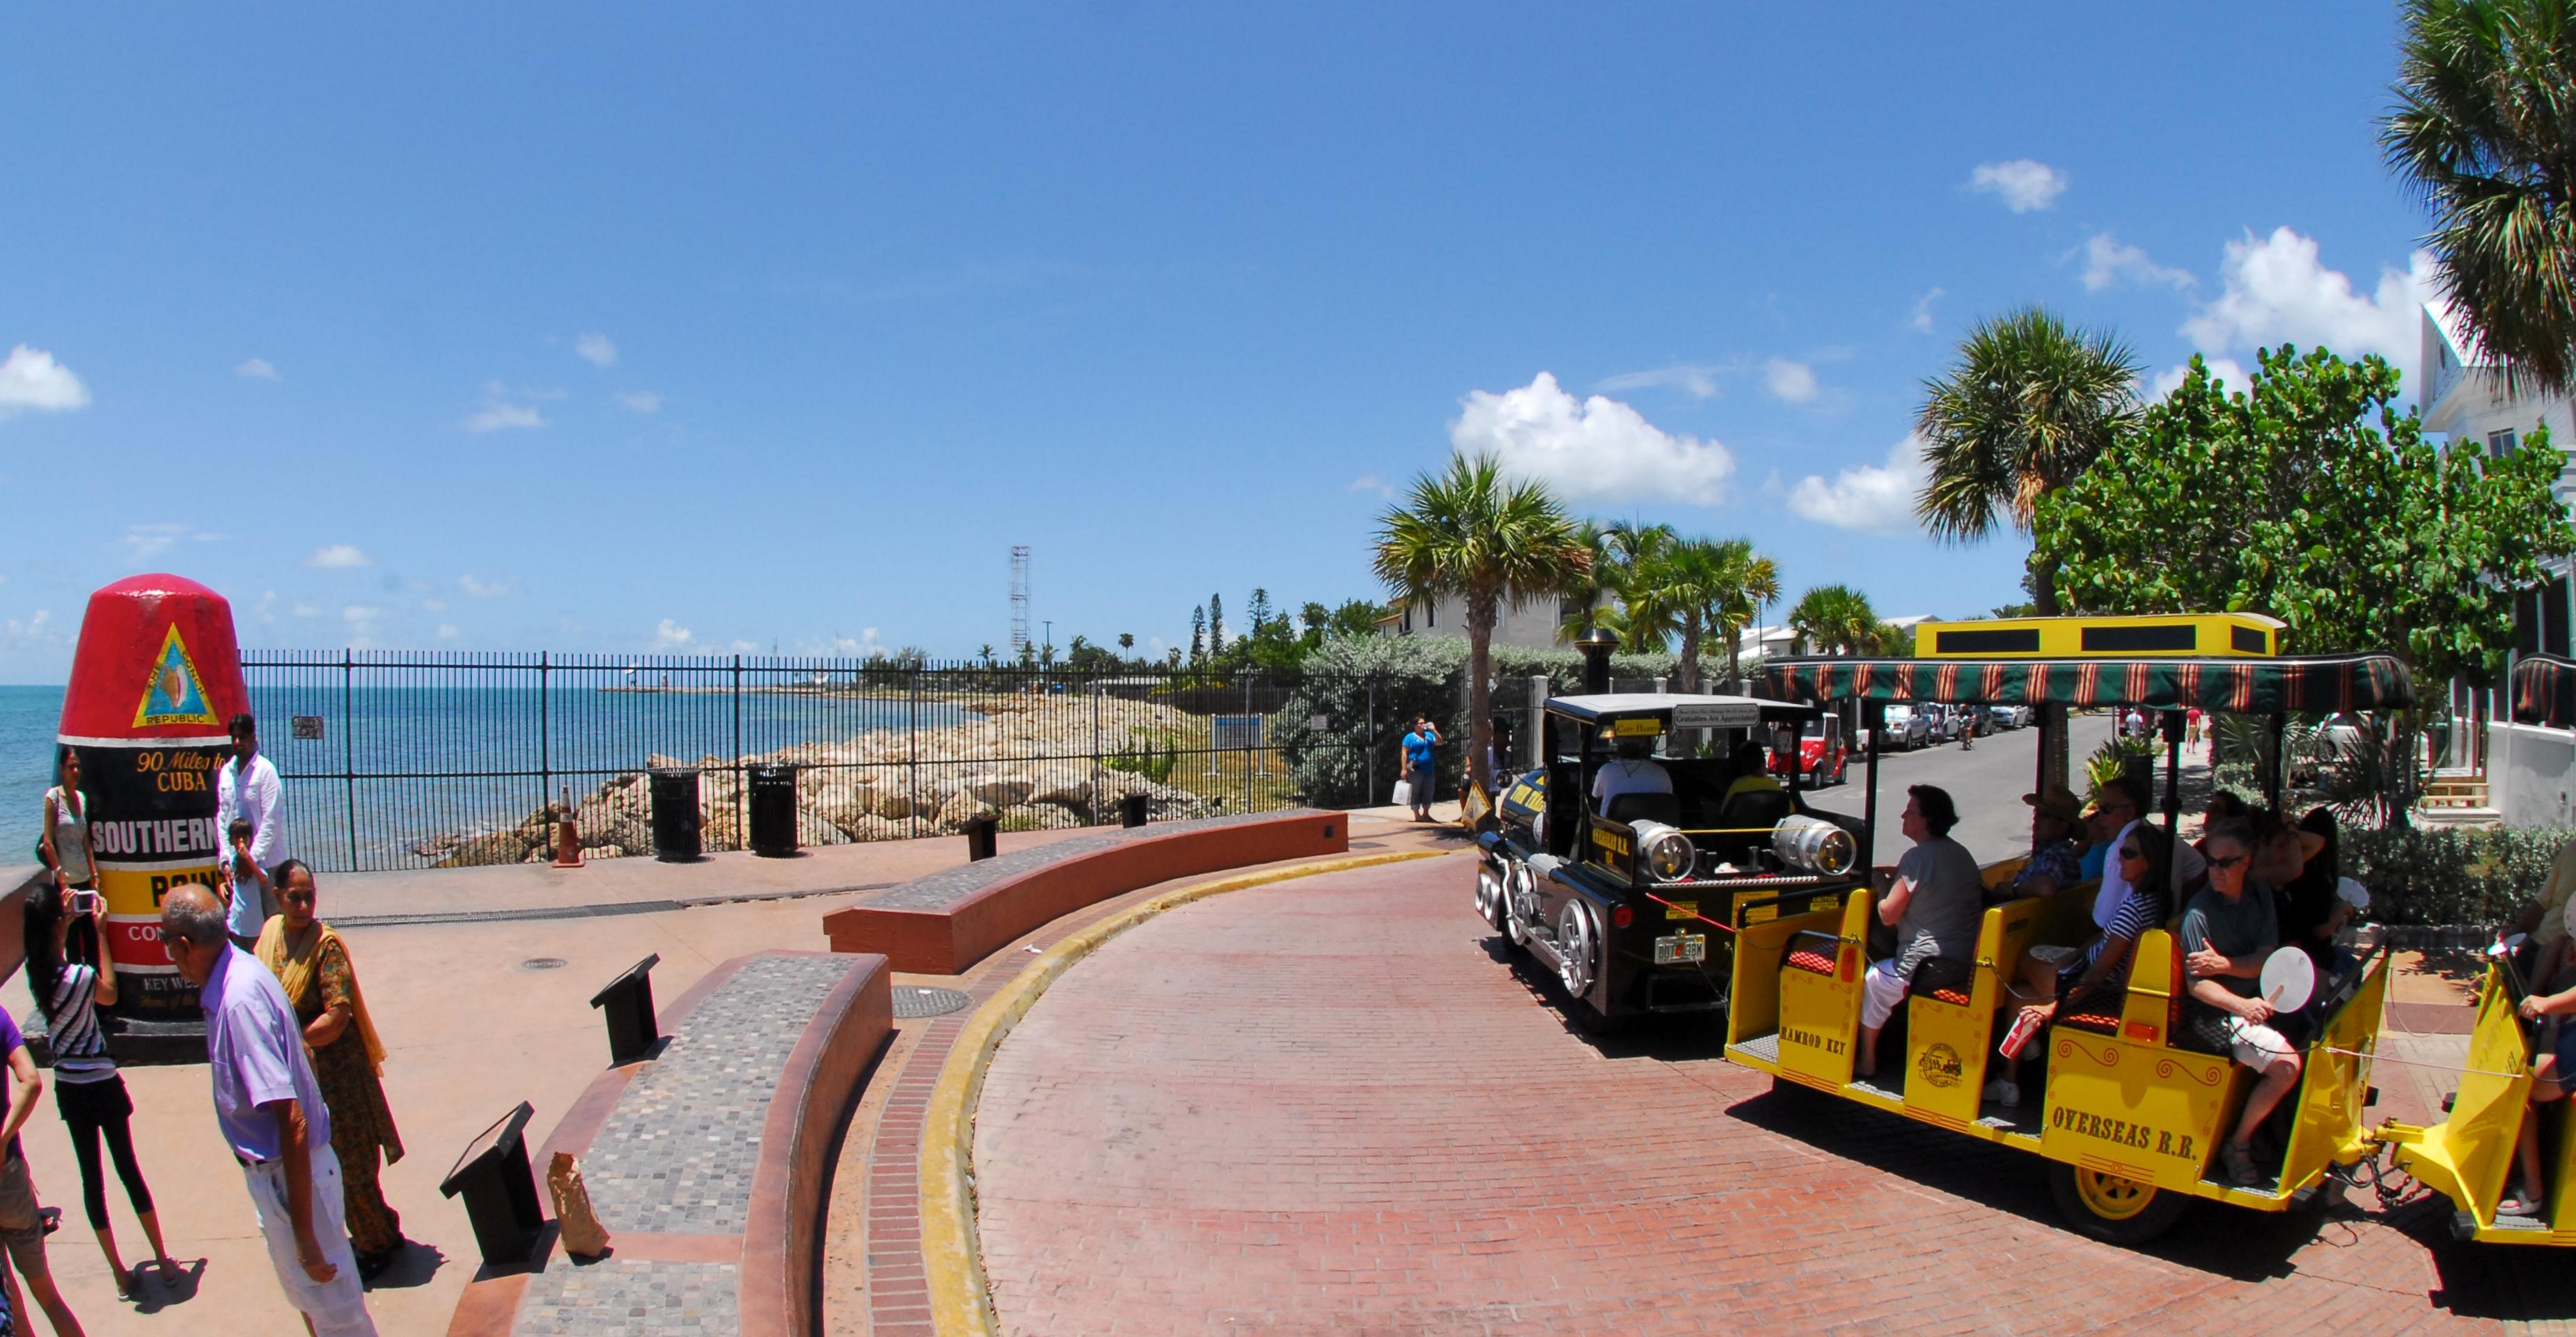 Tour Key West by 'Conch train'